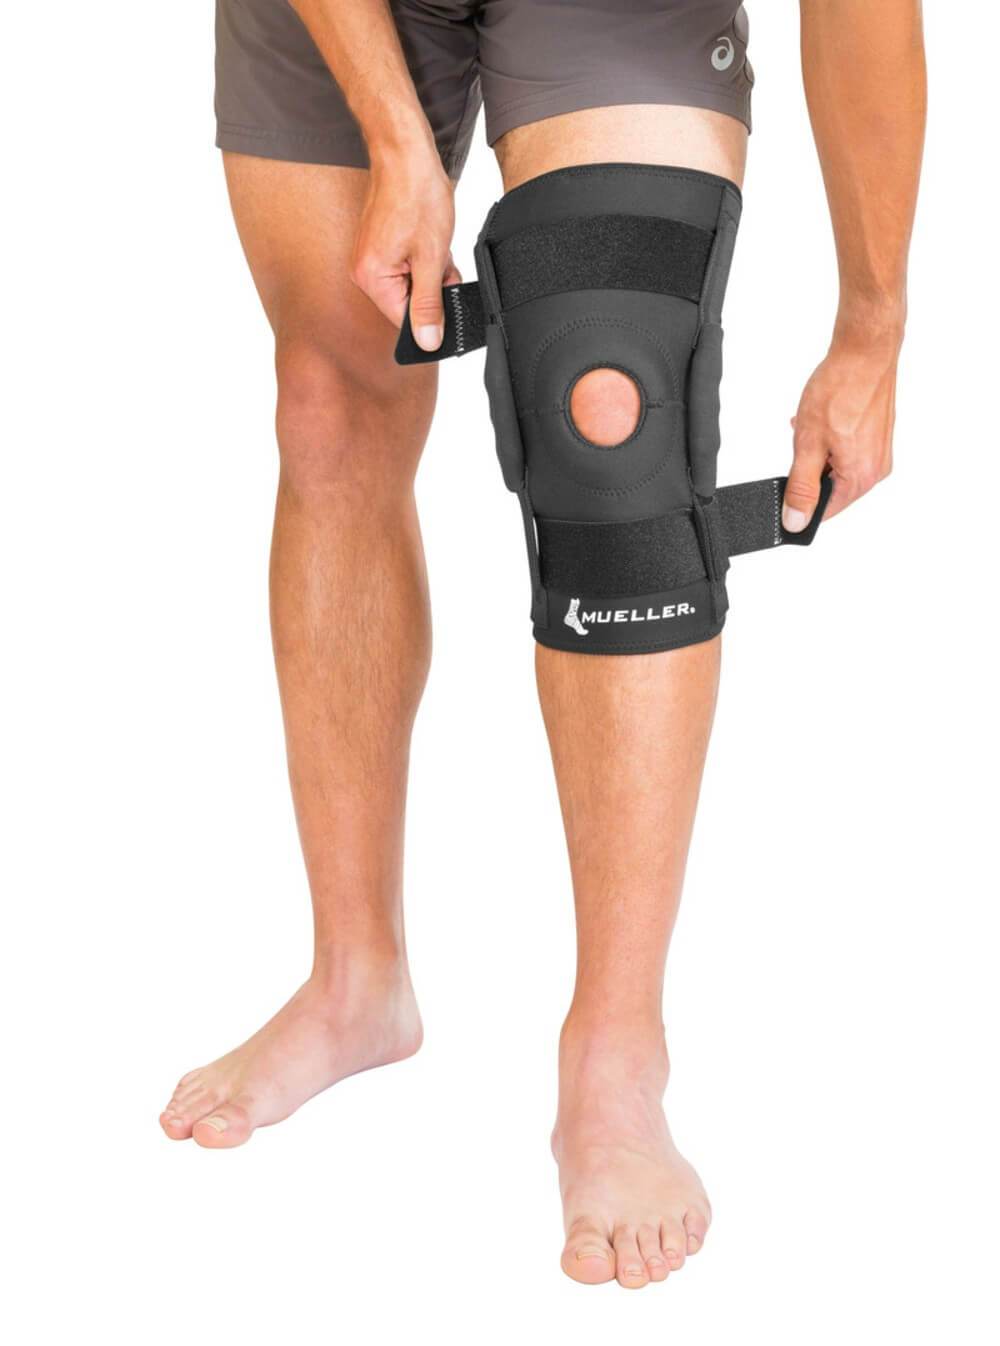 mueller knee wraparound hinges brace